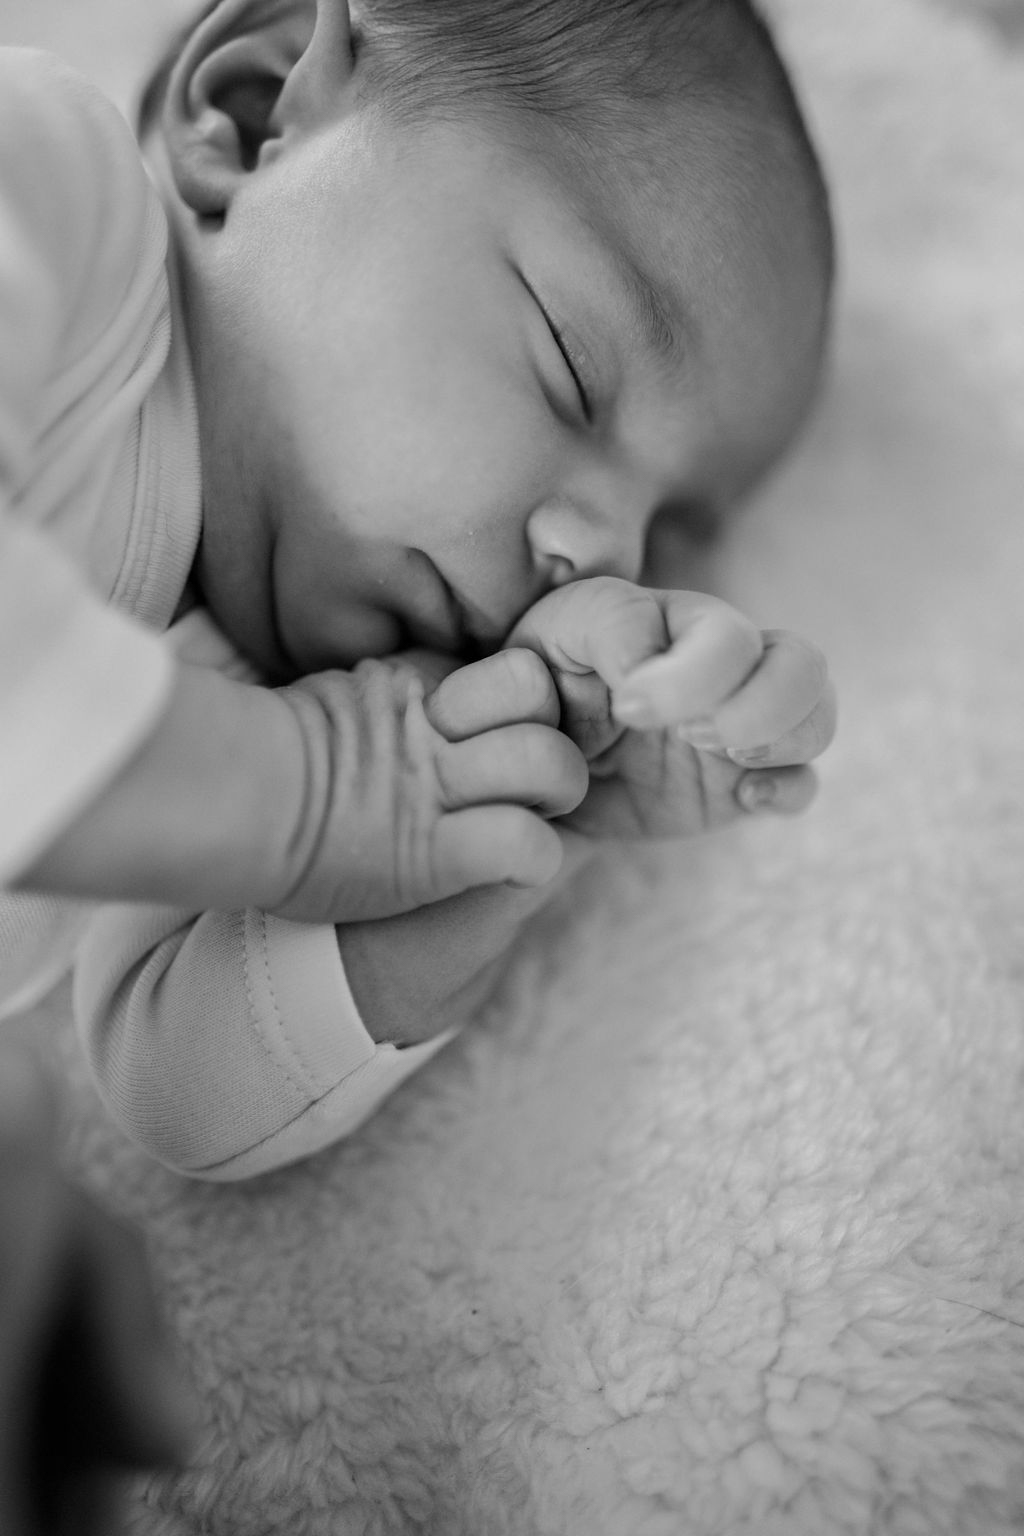 BW photo of sleeping newborn